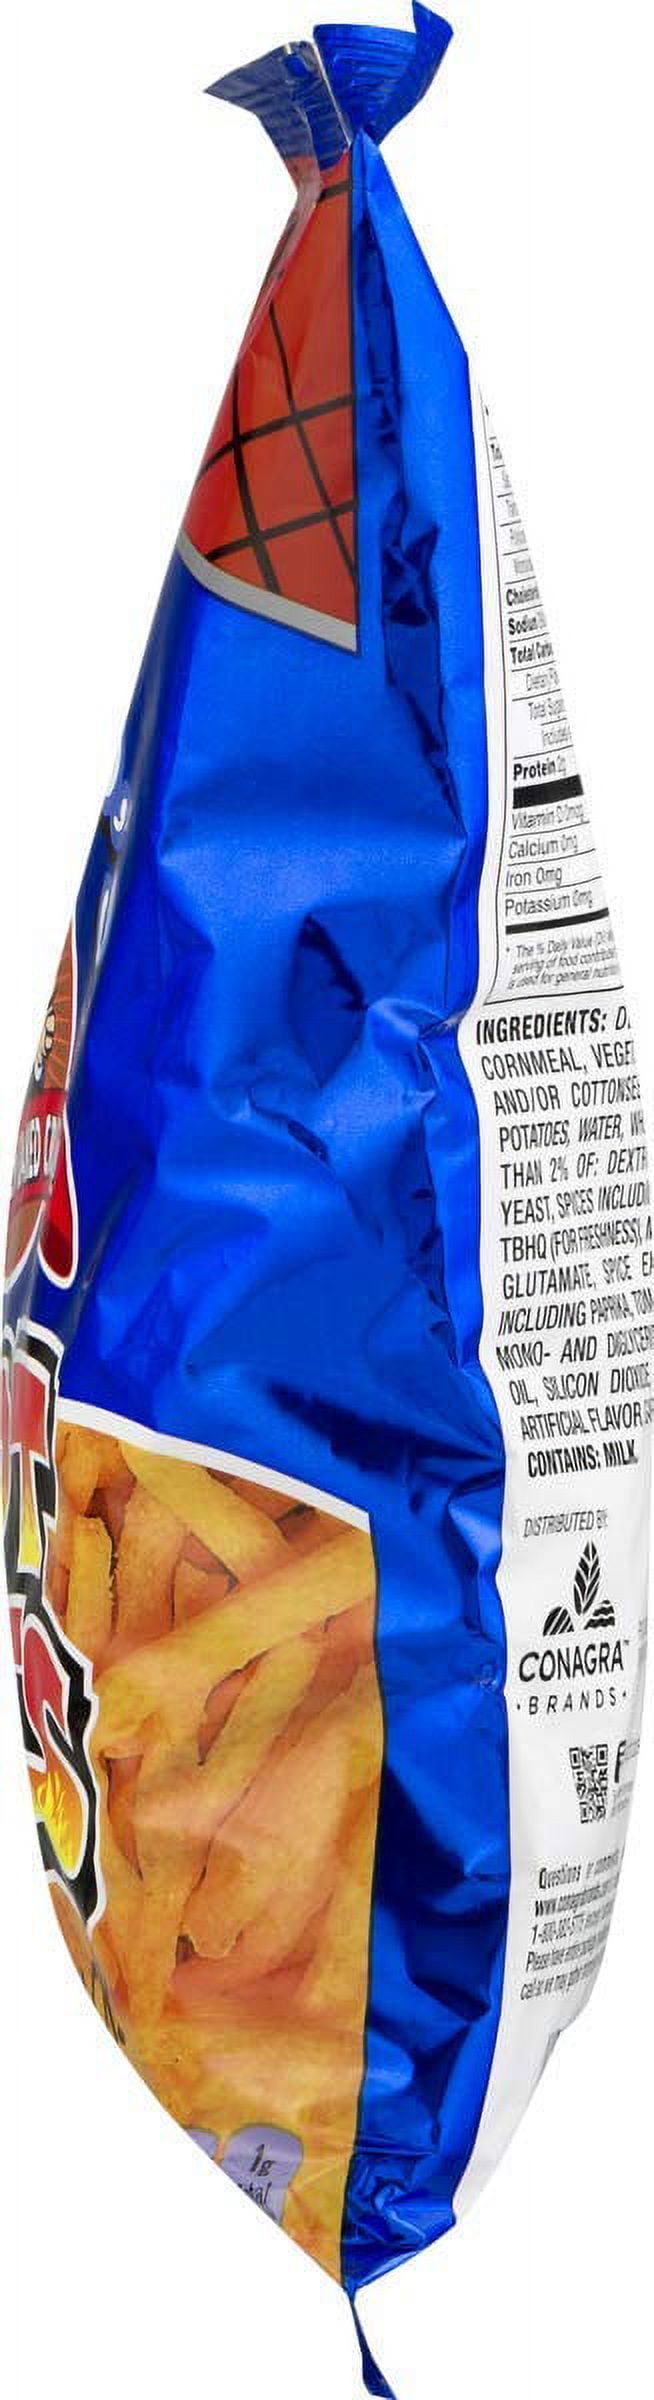 Andy Capp's® Hot Fries Chips Big Bag, 8 oz - Kroger